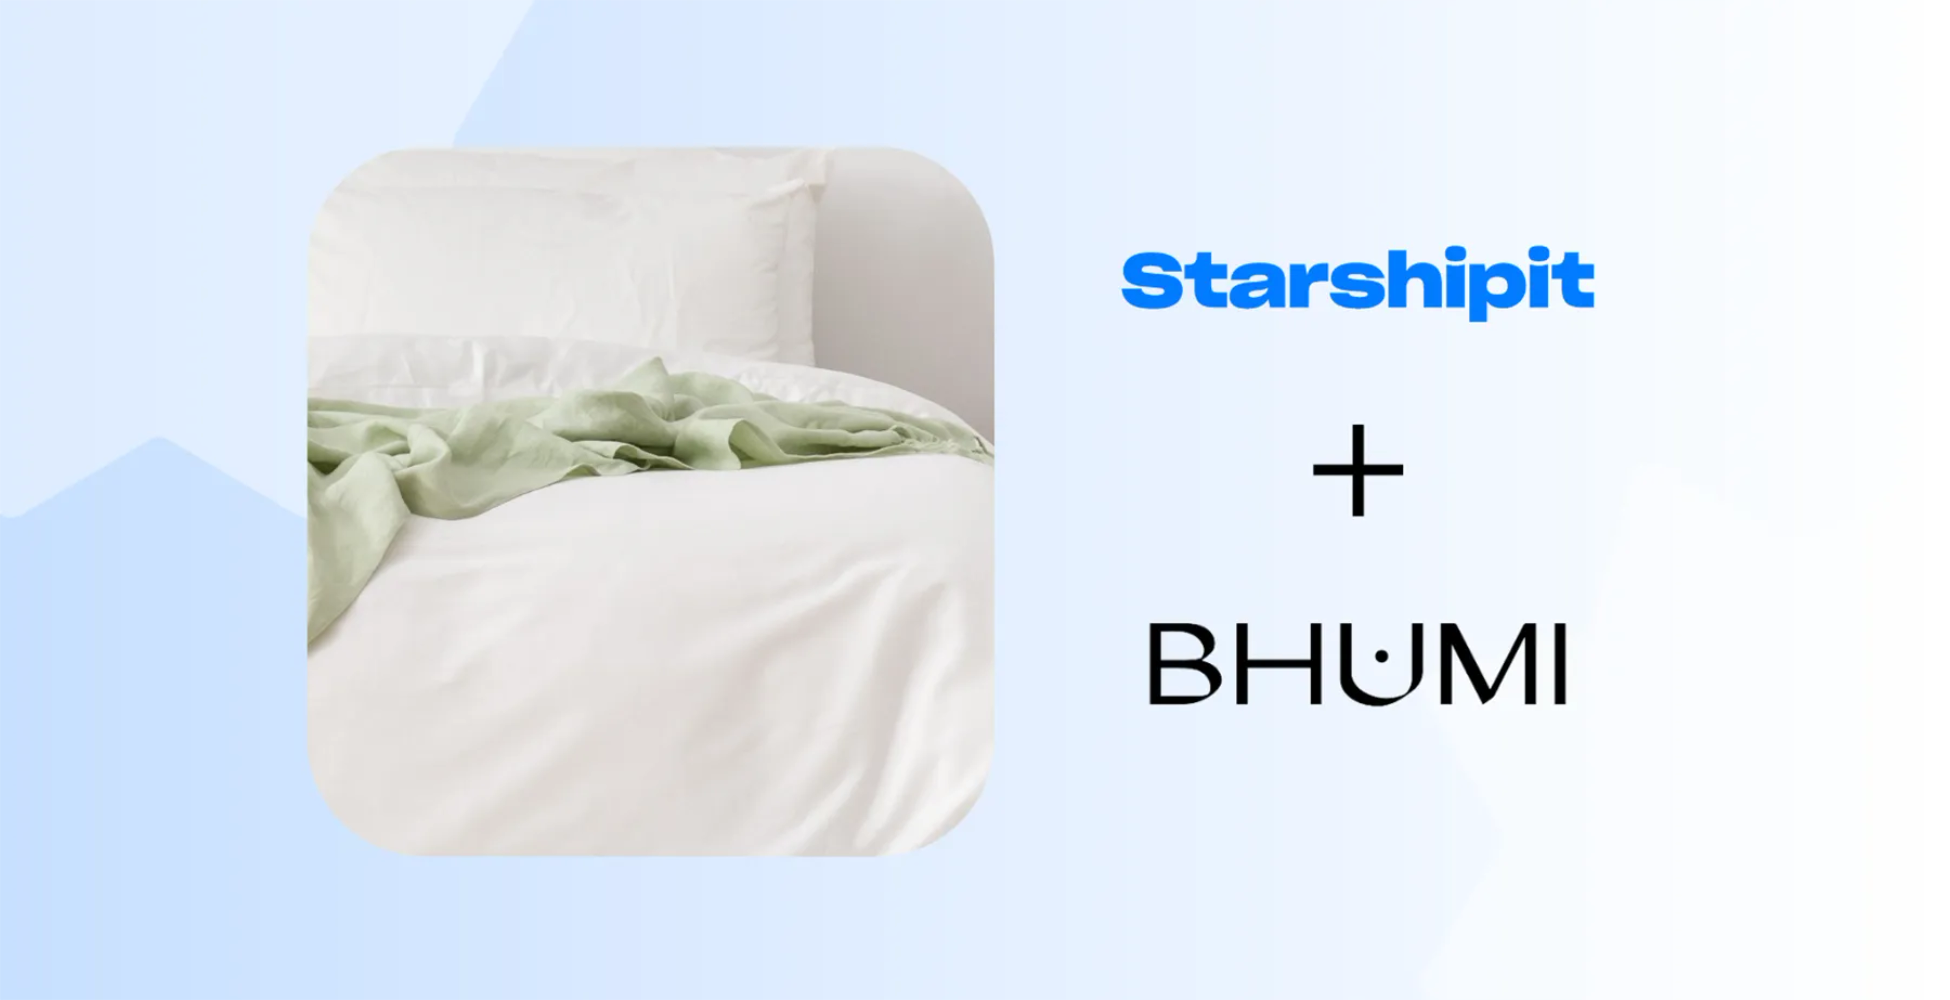 Starshipit and Bhumi case study